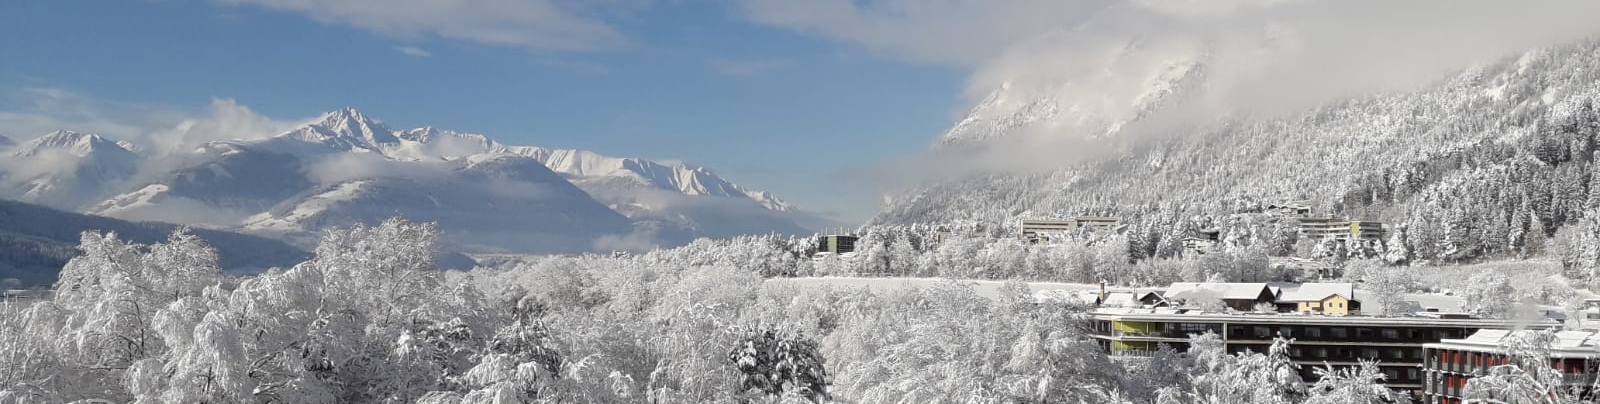 Innsbruck snow